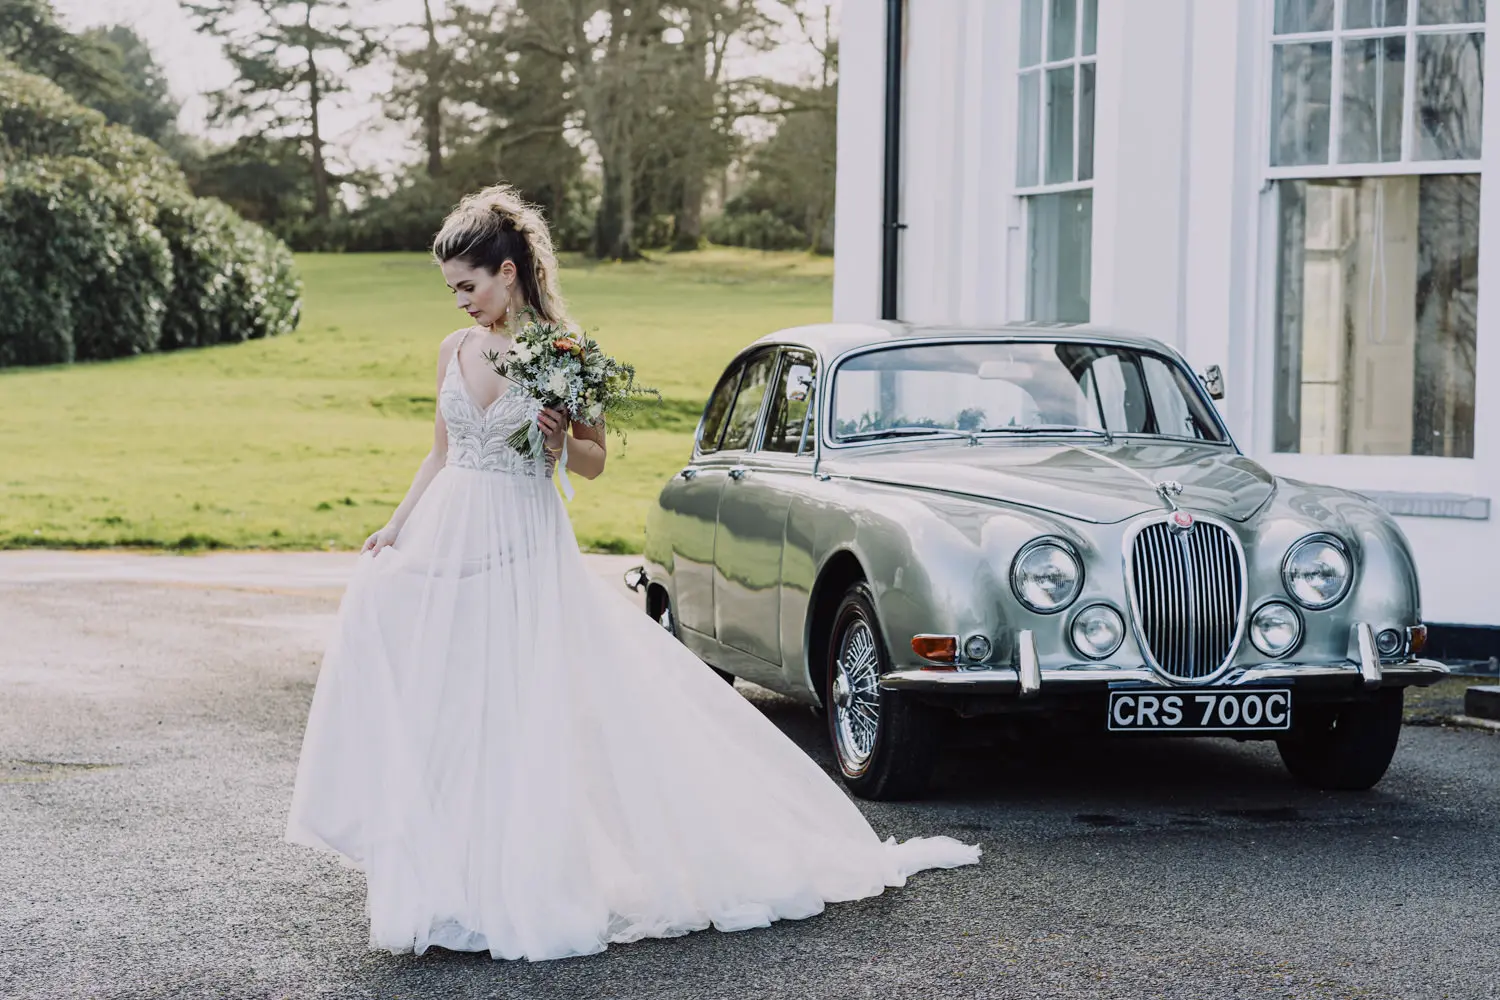 moreton house wedding venue in North Devon, Bride with bouquet next to classic car